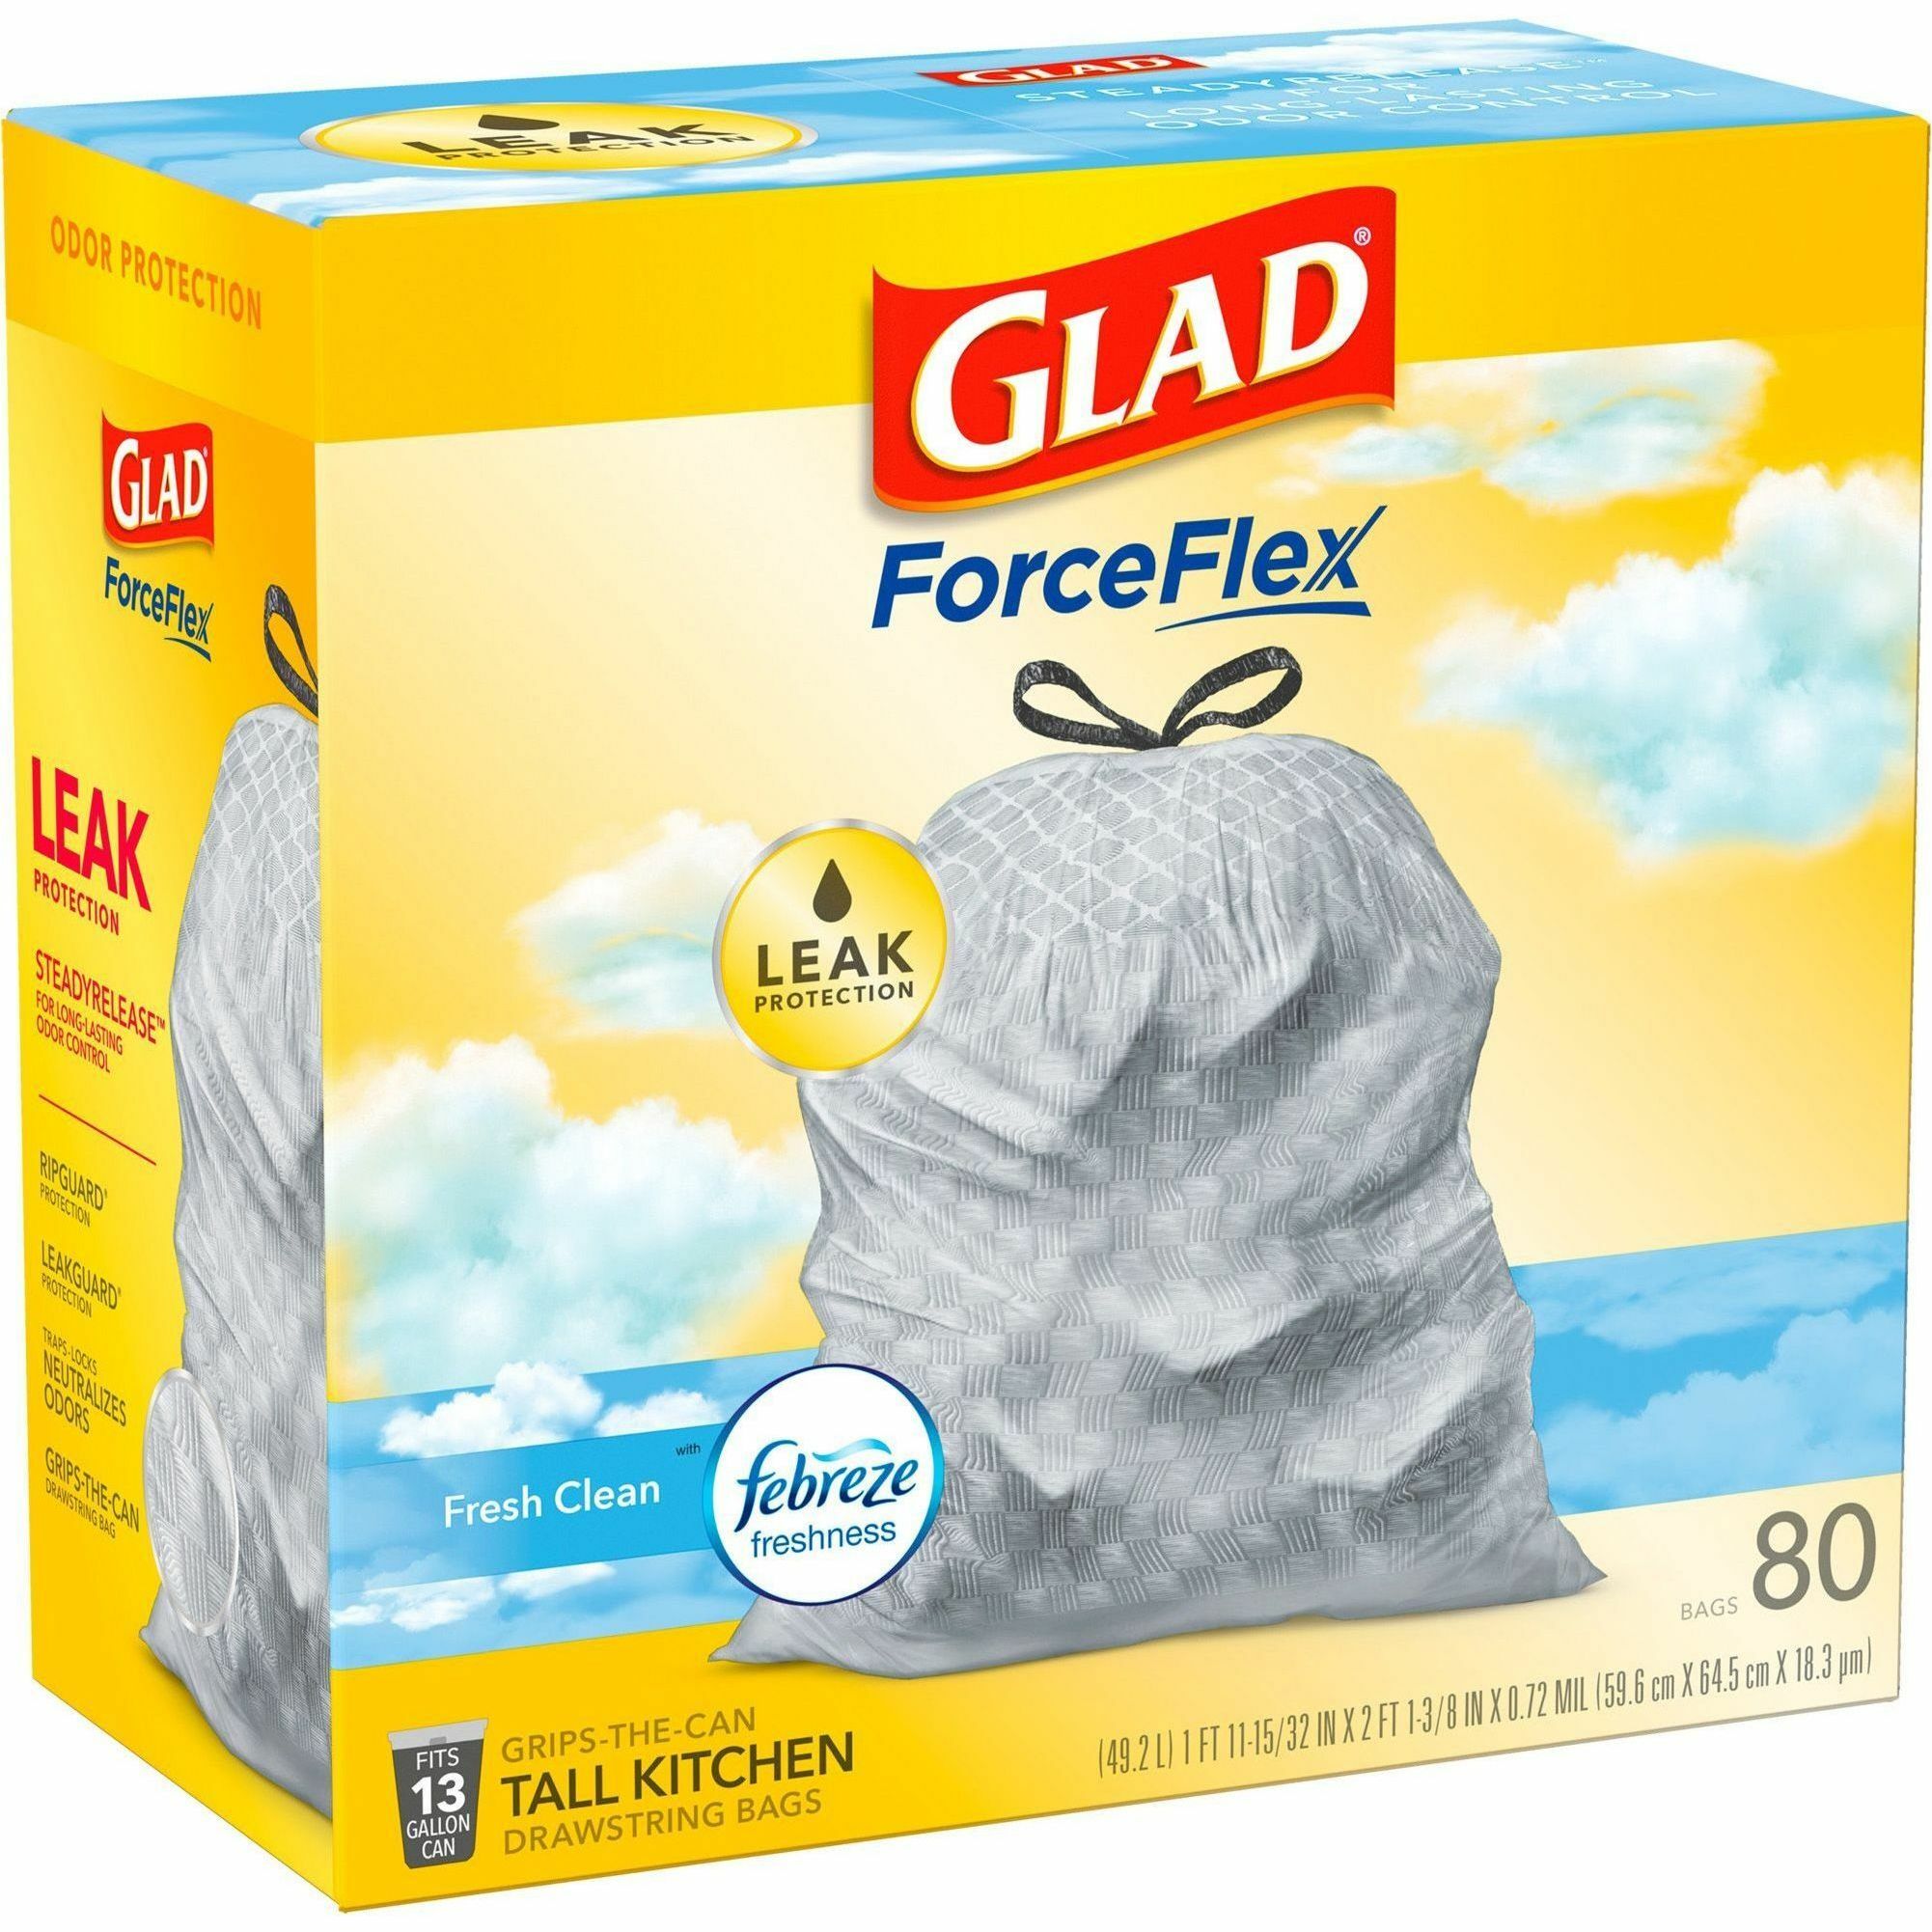 FORCEFLEX ODORSHIELD TALL KITCHEN DRAWSTRING BAGS by Glad® CLO78714CT